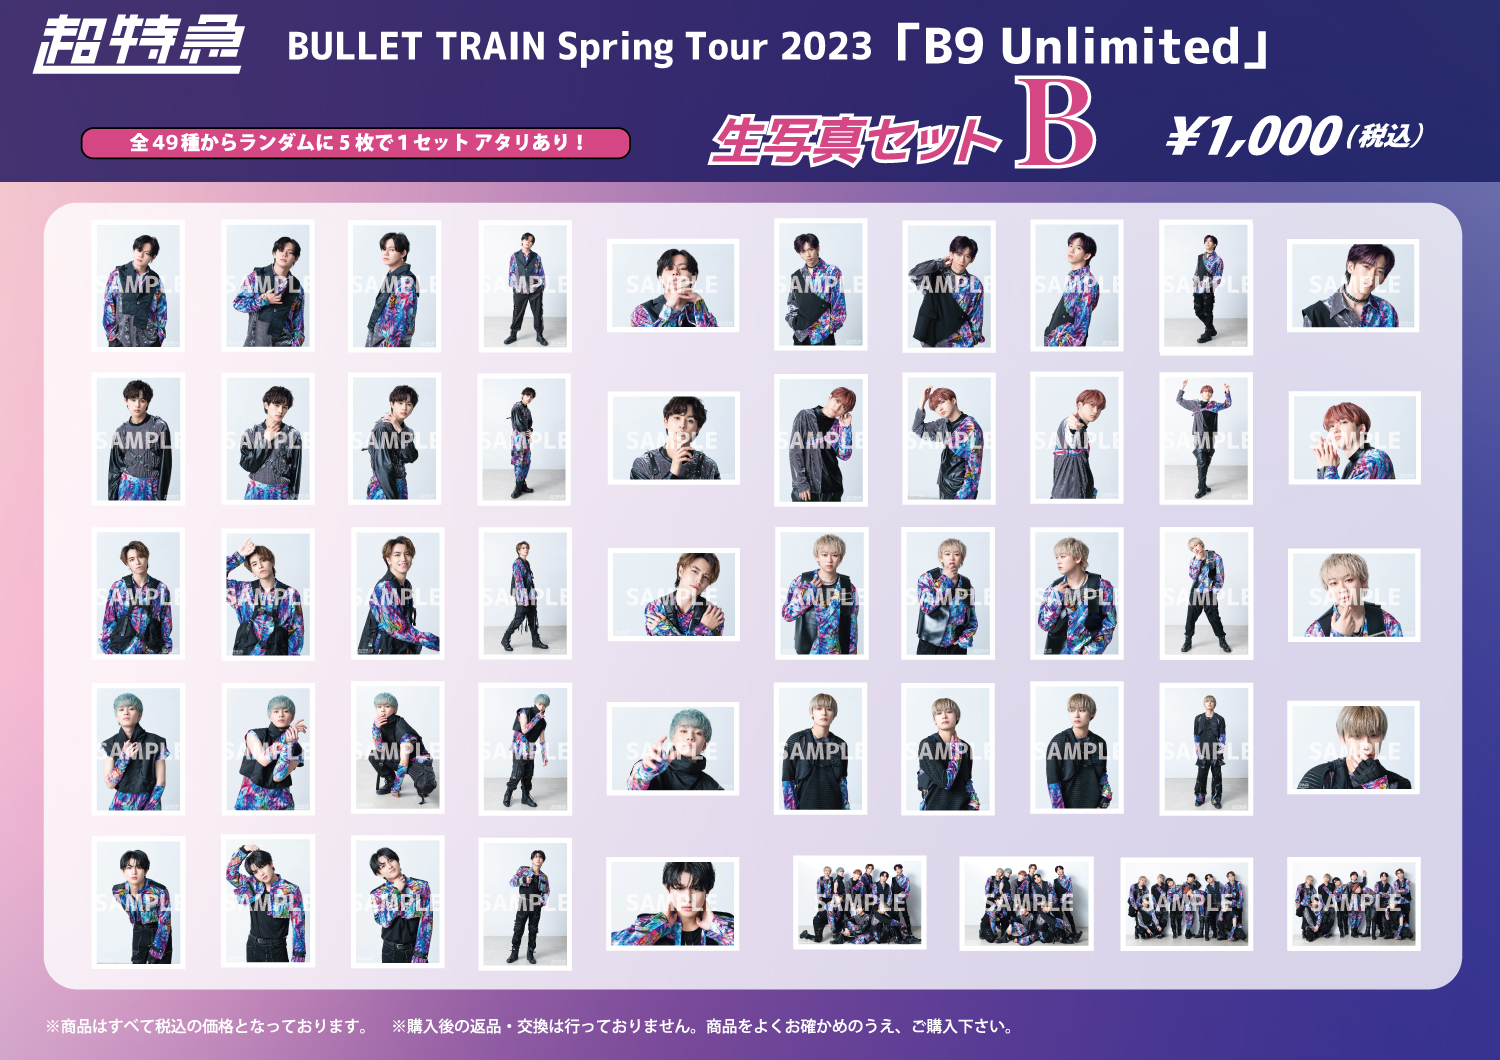 BULLET TRAIN Spring Tour 2023「B9 Unlimited」オフィシャルグッズ【7 ...